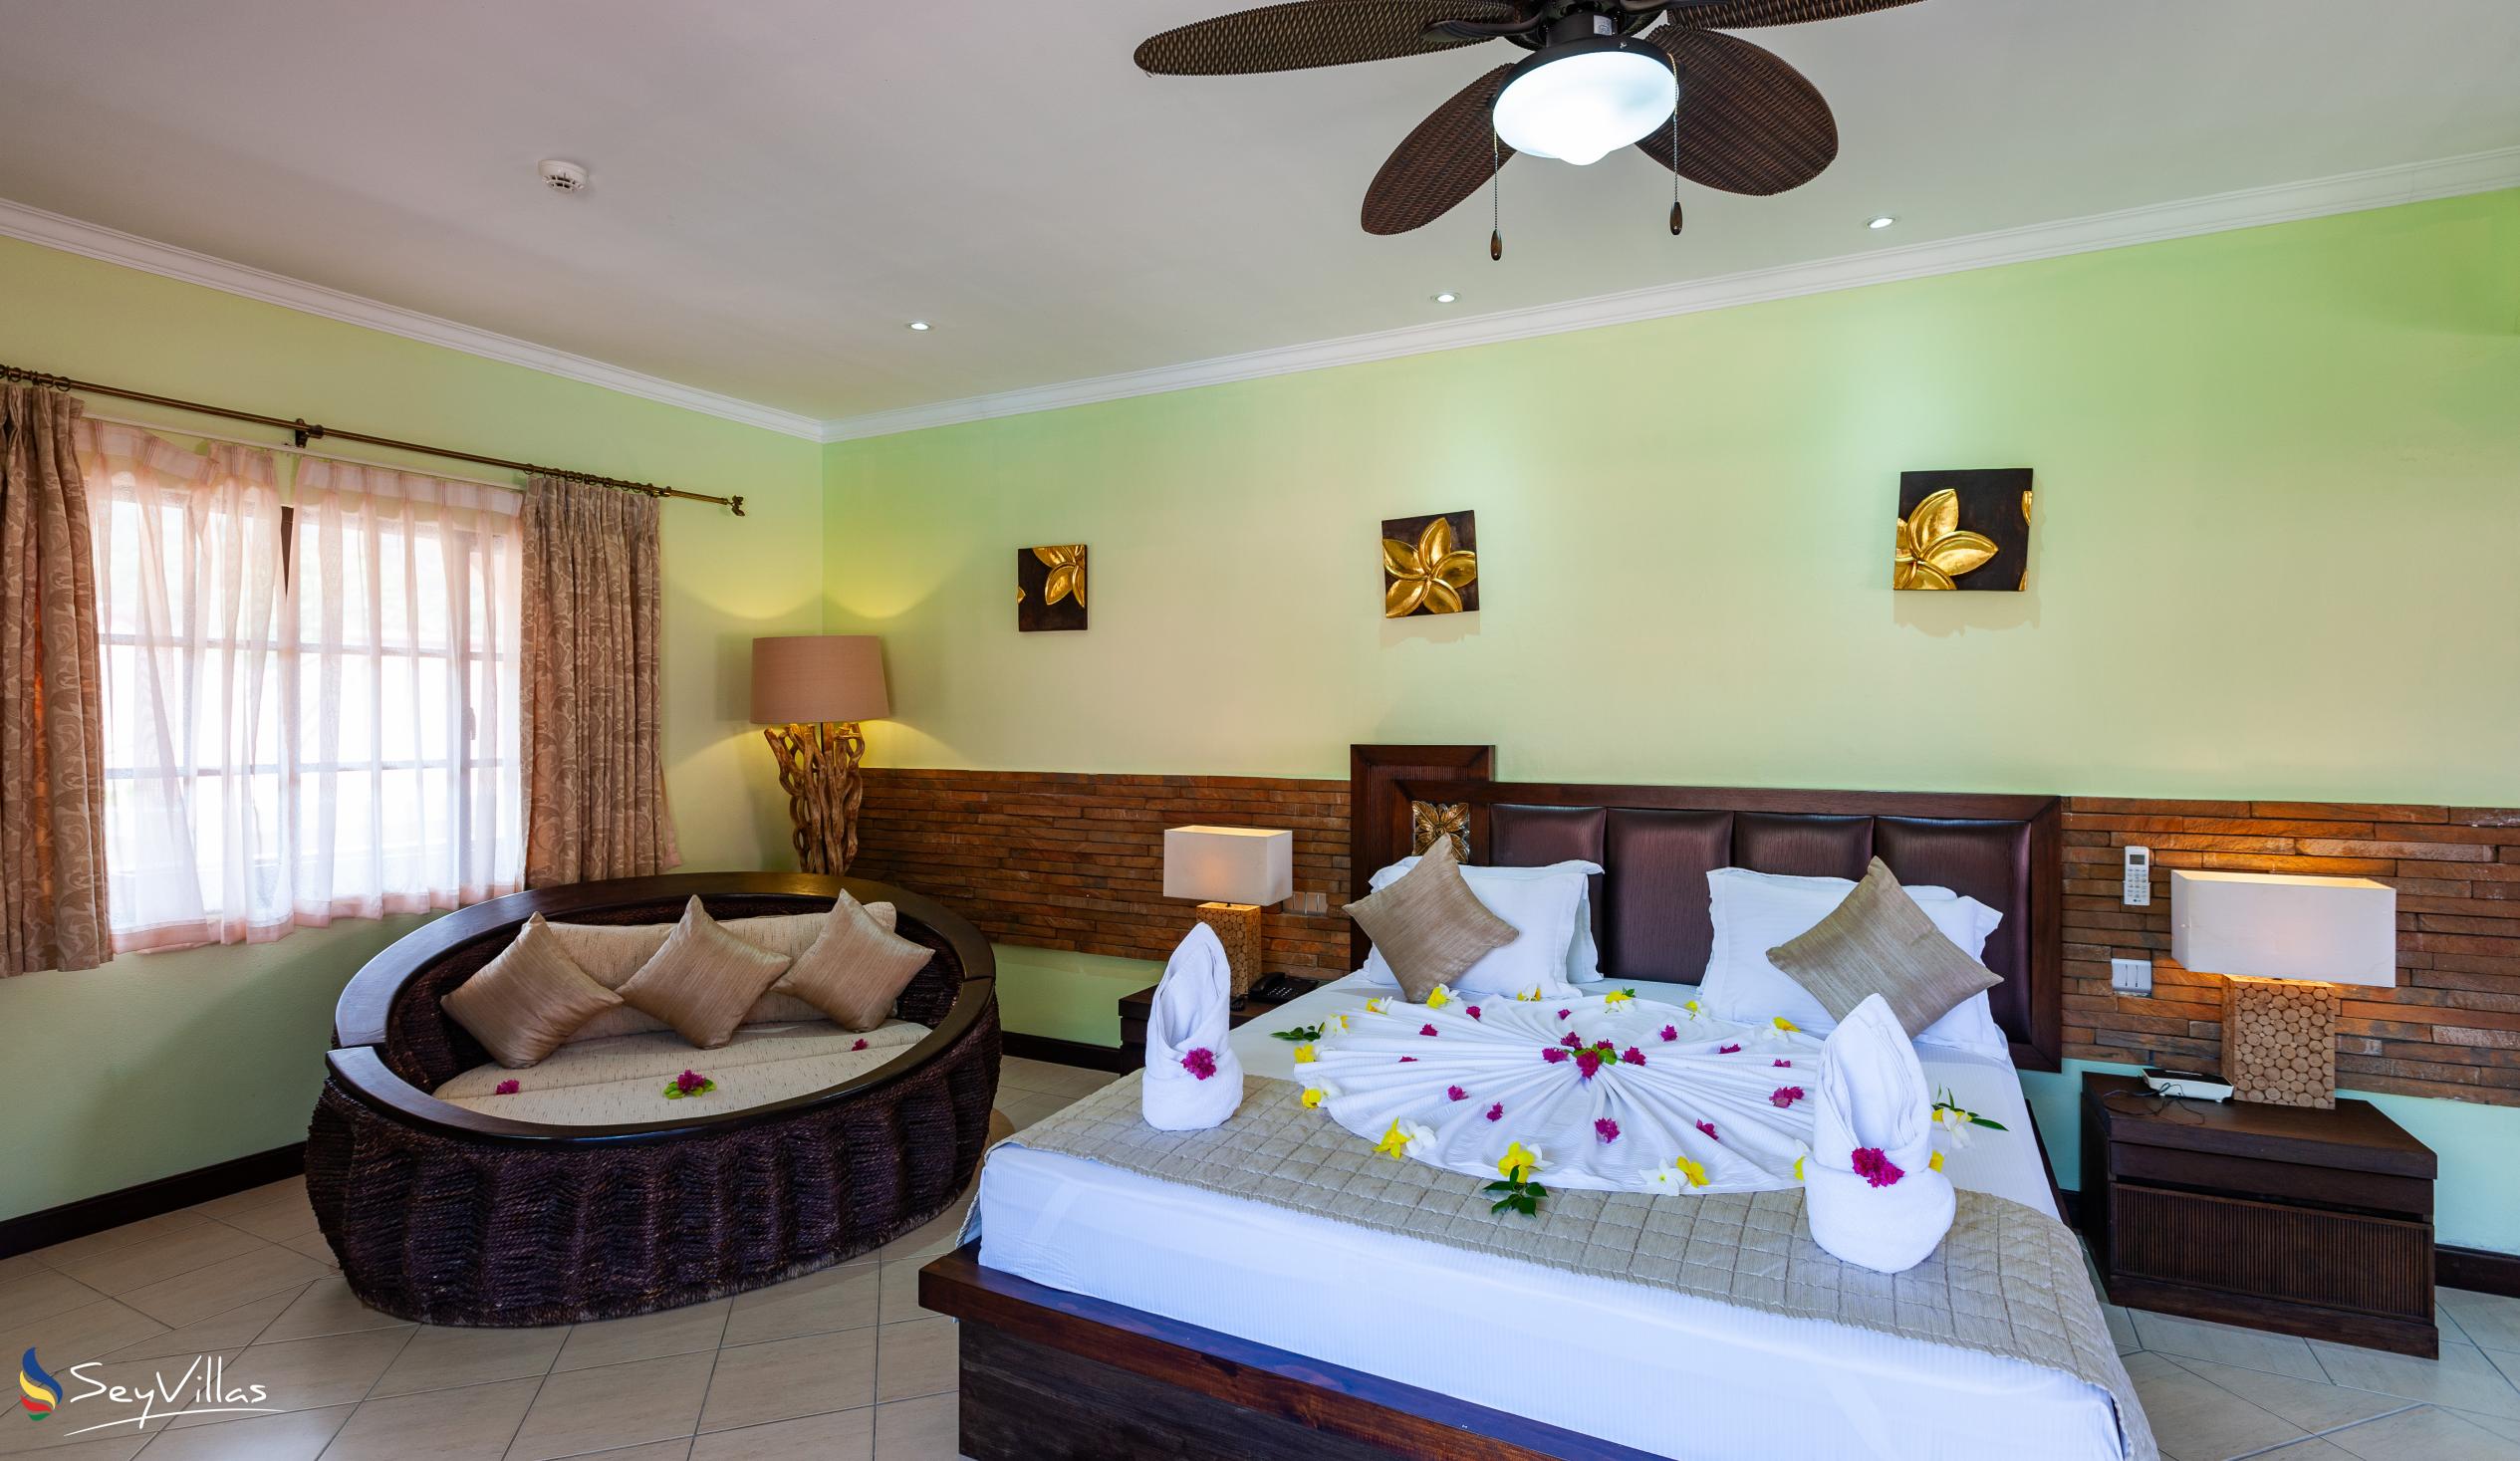 Foto 55: Oasis Hotel, Restaurant & Spa - Chambre Deluxe - Praslin (Seychelles)